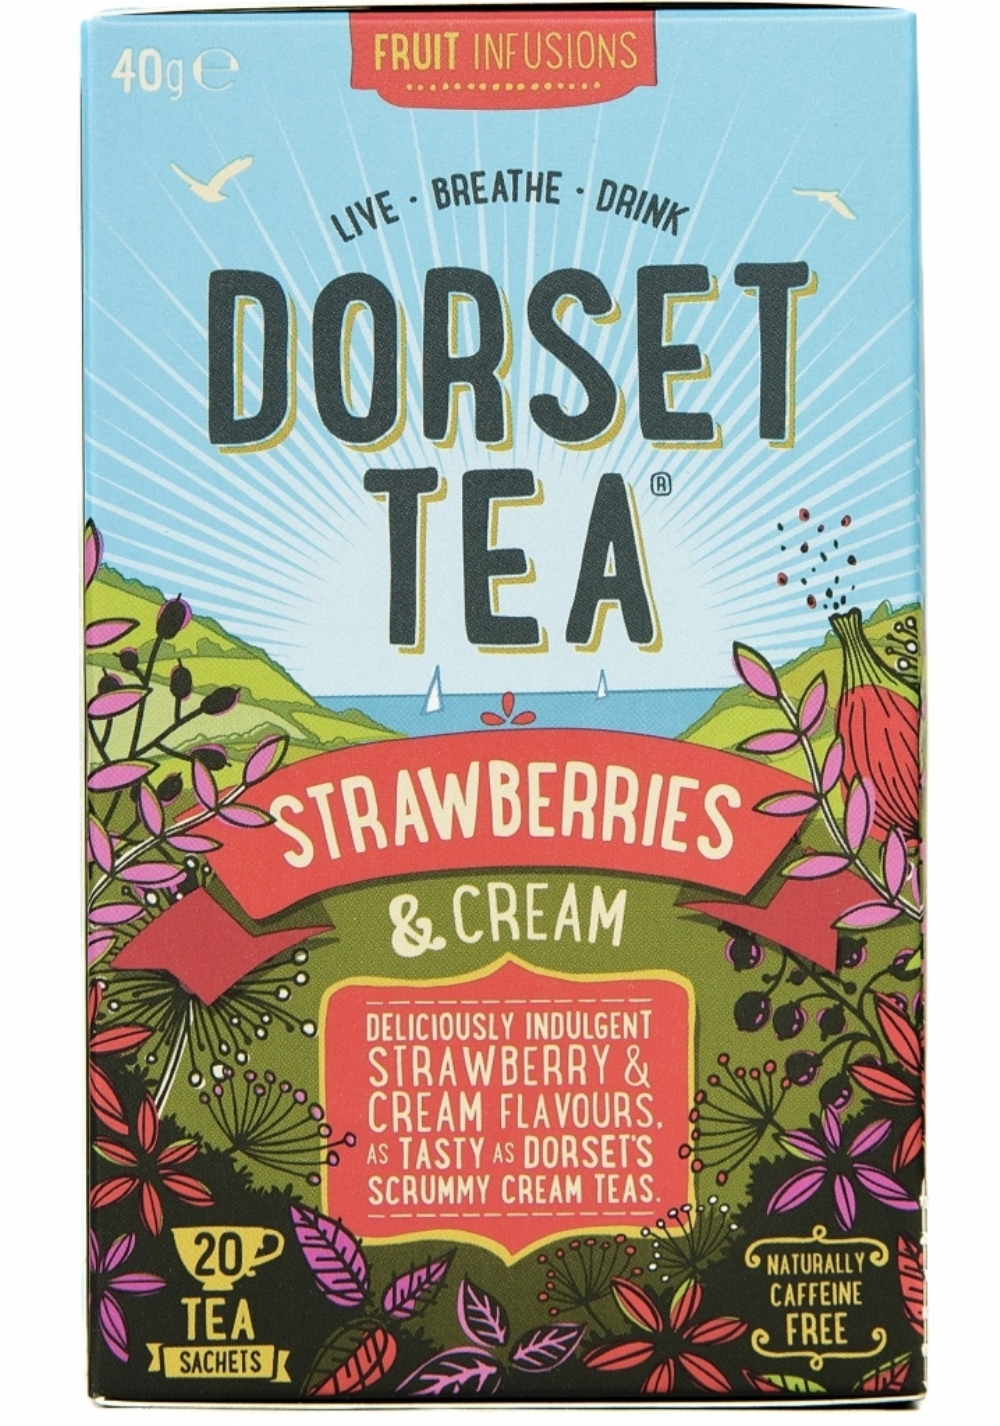 DORSET TEA Strawberries & Cream - 20 Sachets